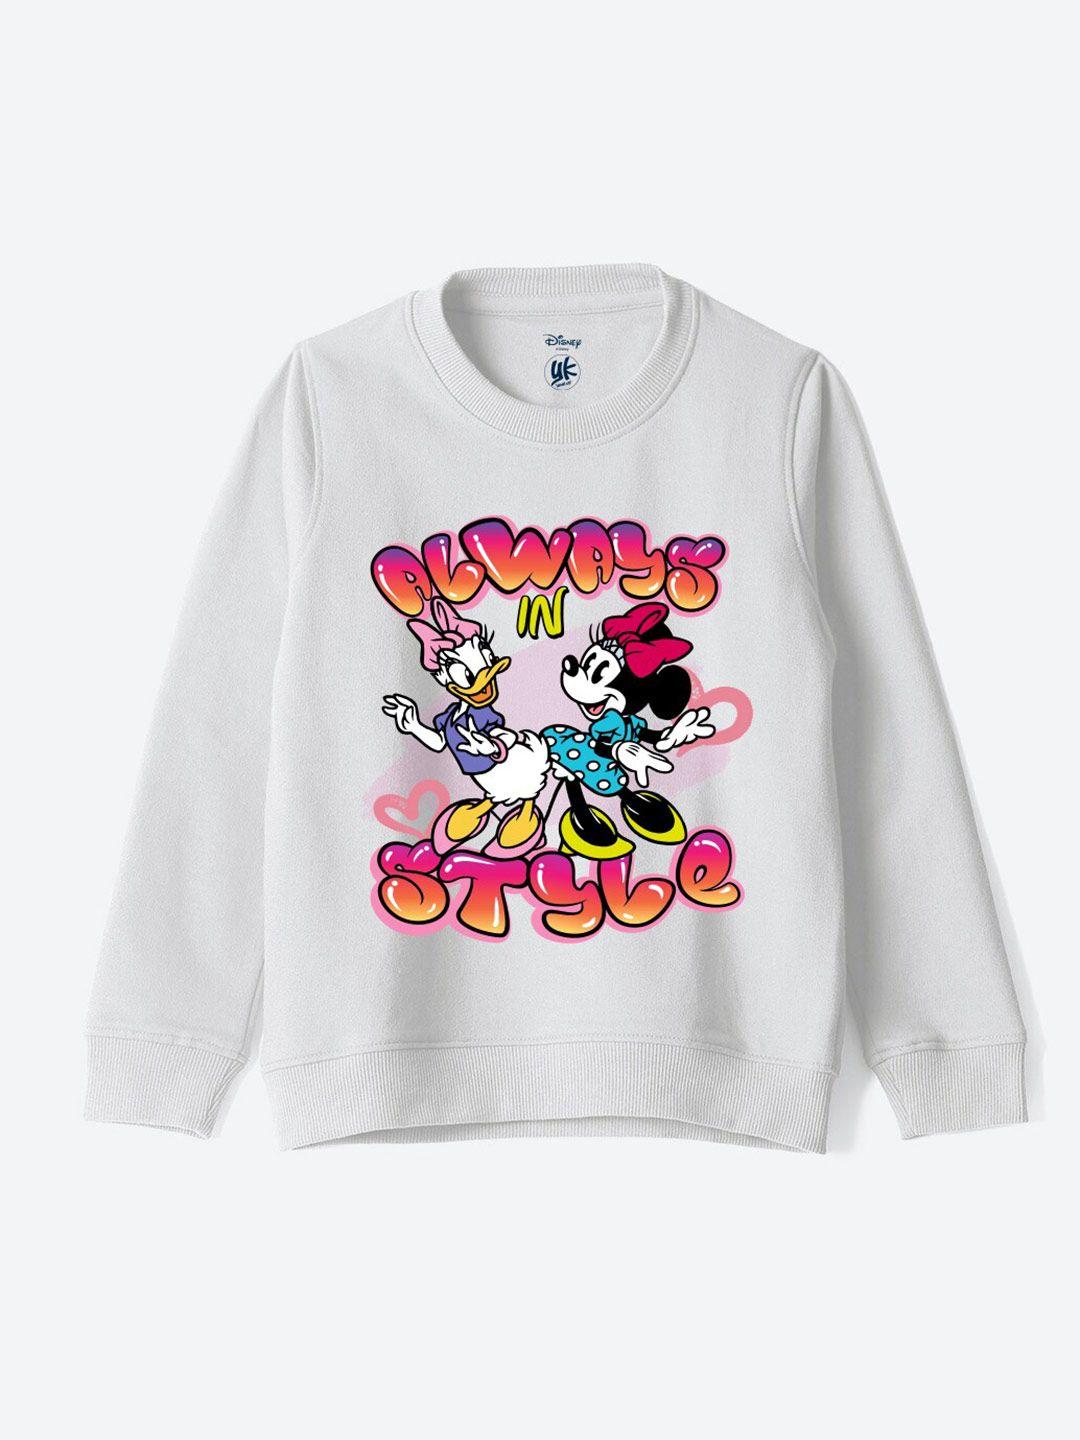 yk disney kids humour and comic minnie & daisy printed pullover sweatshirt